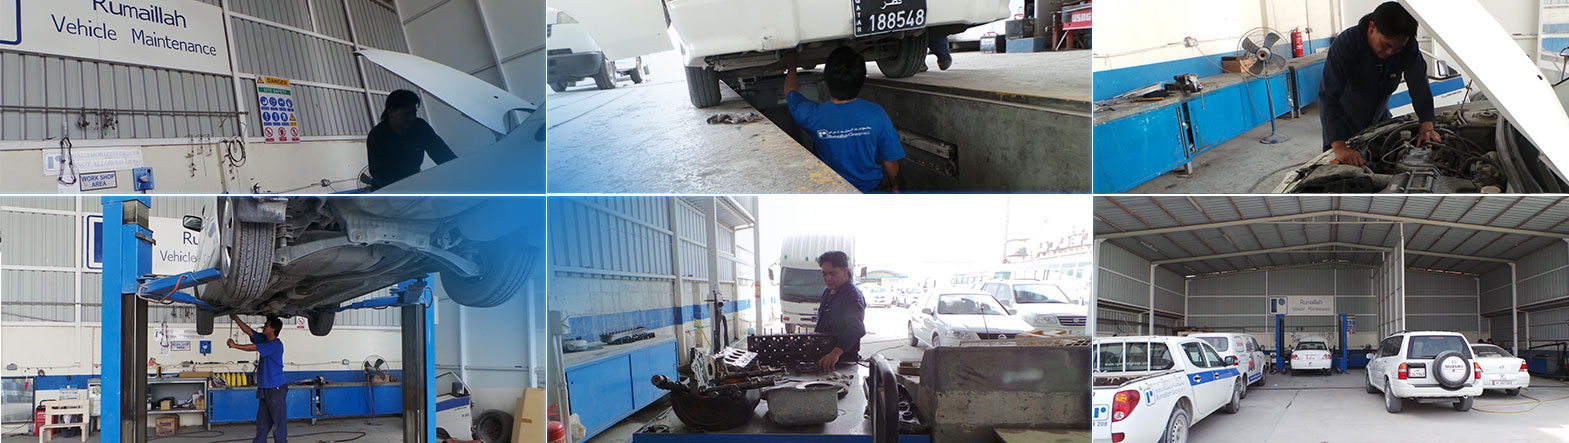 Rumaillah Group cubicles and vehicle maintenance